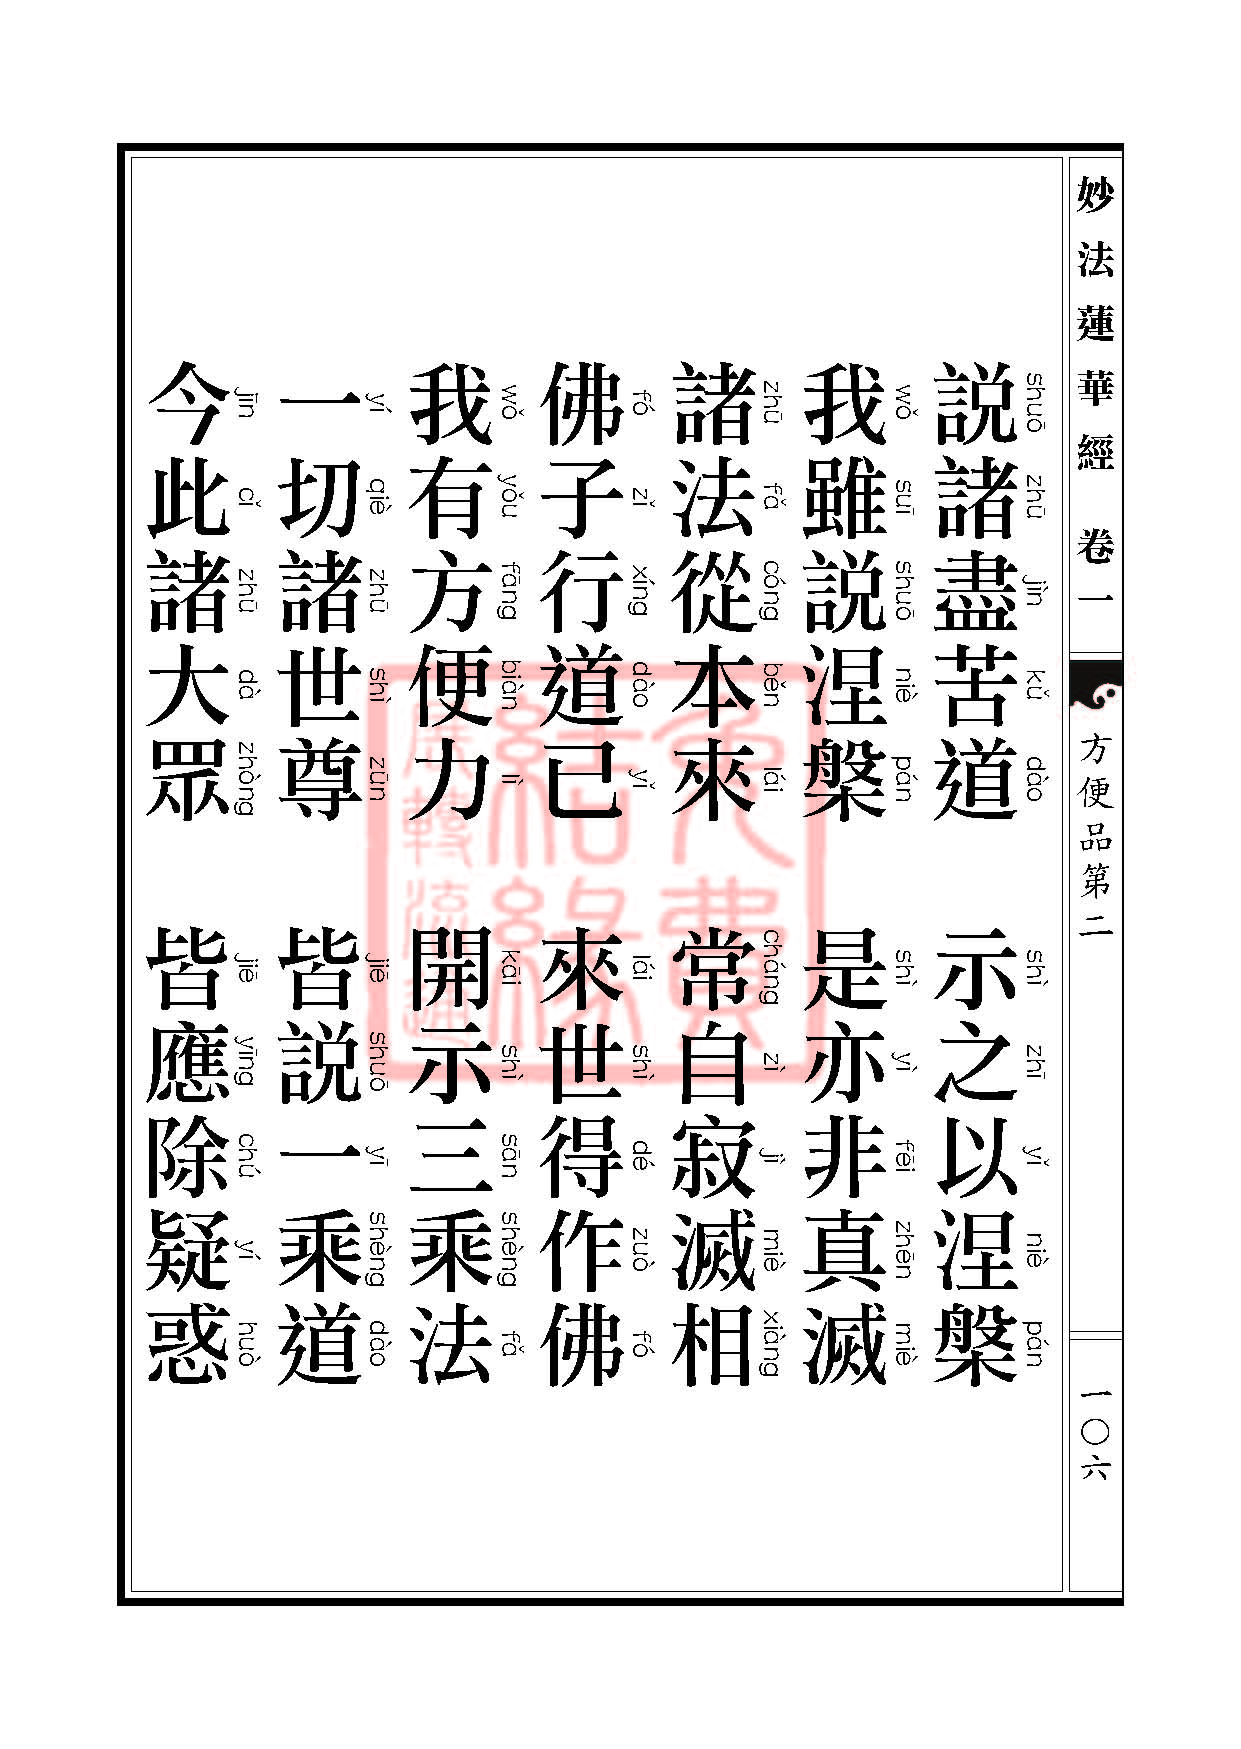 Book_FHJ_HK-A6-PY_Web_ҳ_106.jpg